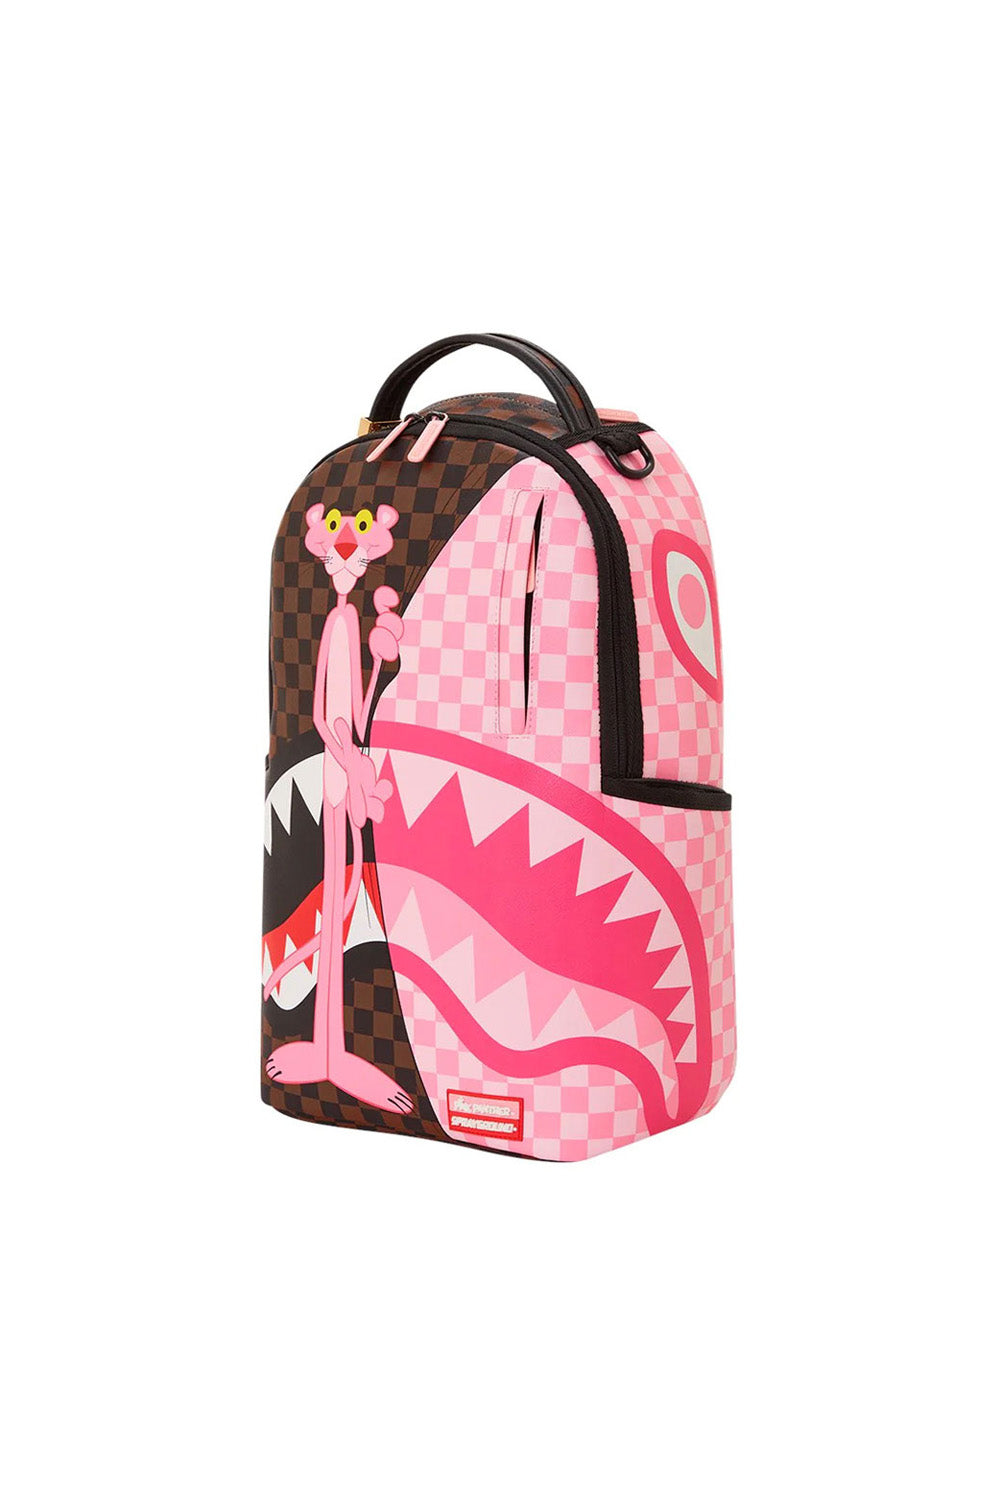 Update more than 56 sprayground anime camo pink backpack latest   induhocakina